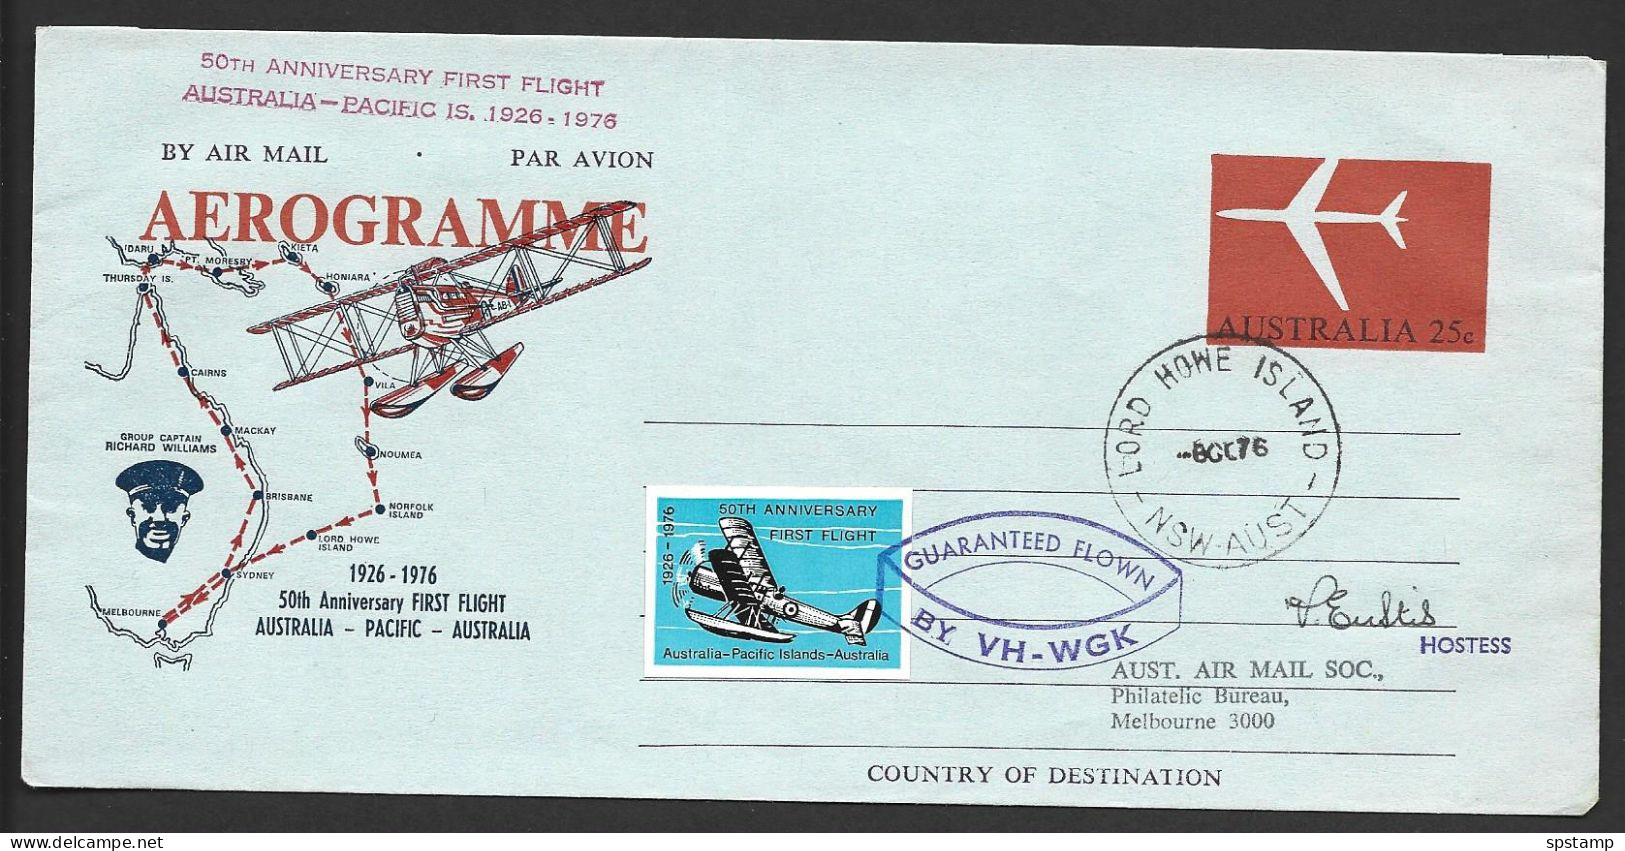 Australia 1976 Aerogramme Used Lord Howe Island To Melbourne, Carried On 1926 First Pacific RAAF Flight Re-enactment - Aerogrammi